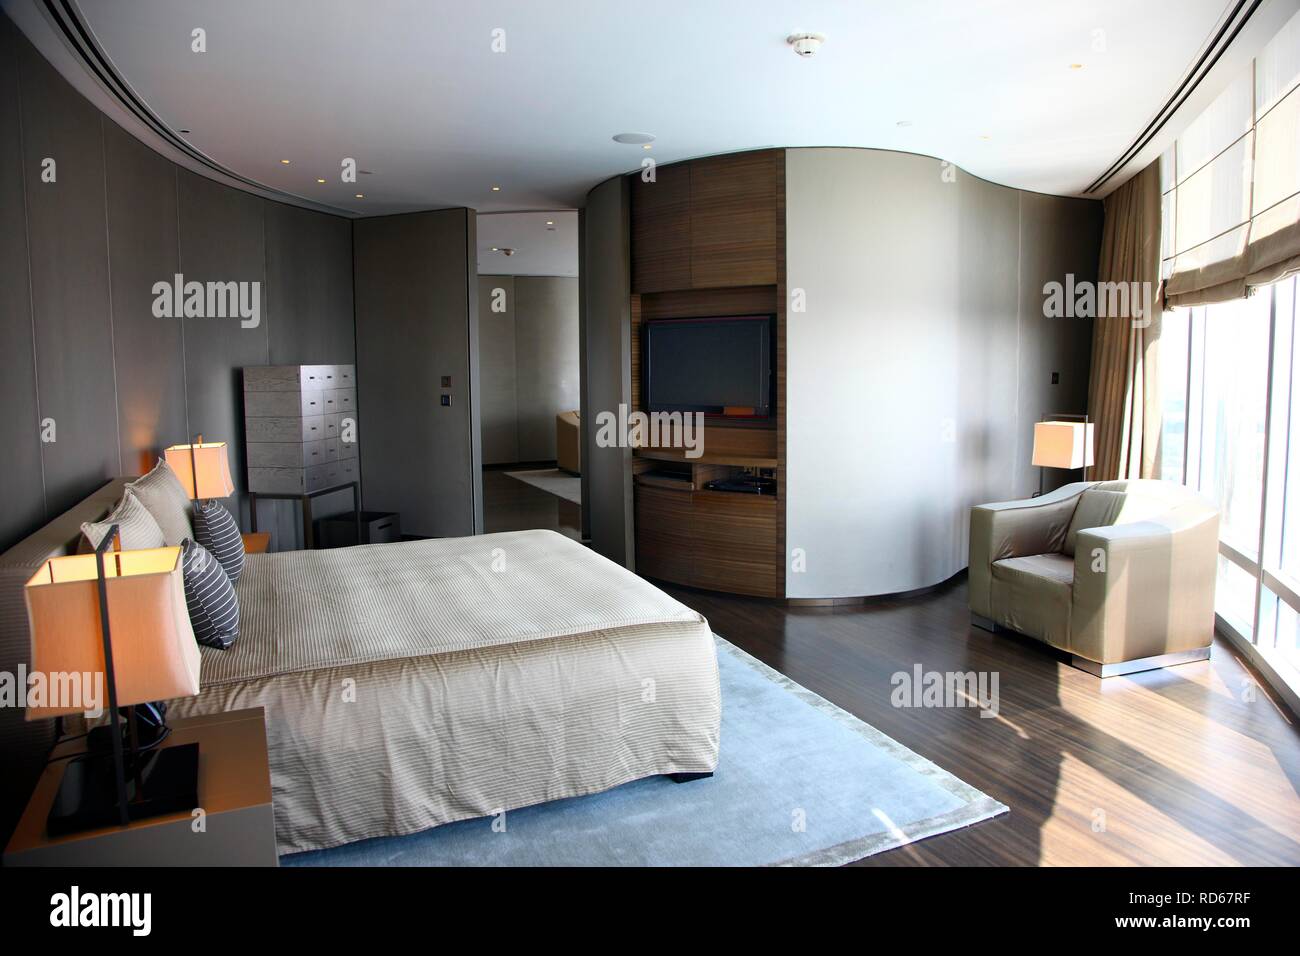 Armani Hotel Dubai High Resolution Stock Photography and Images - Alamy